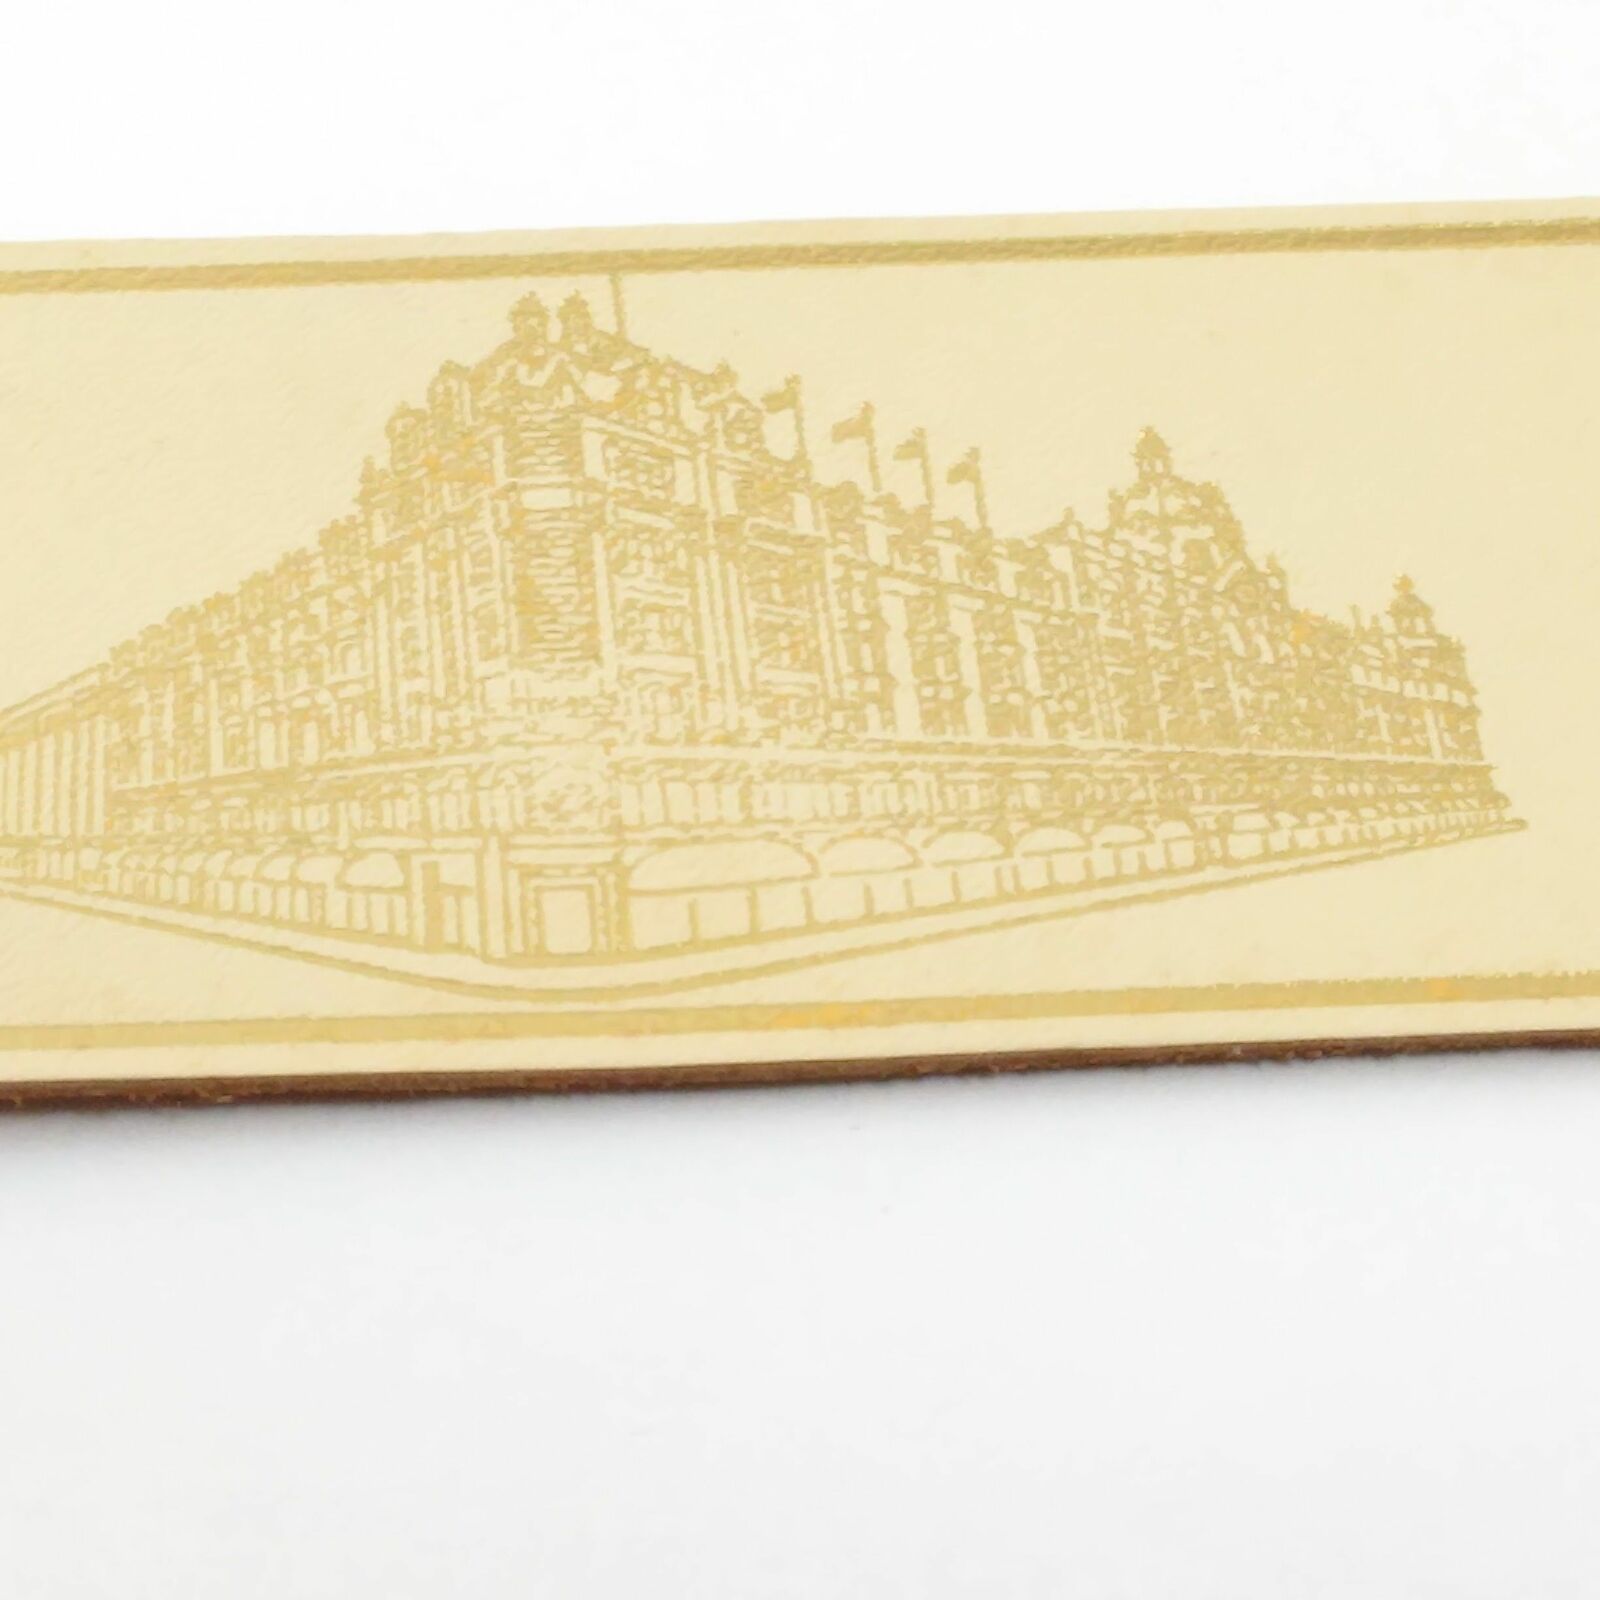 Harrods Department Store Knightsbridge London Cream Golden Leather Bookmark